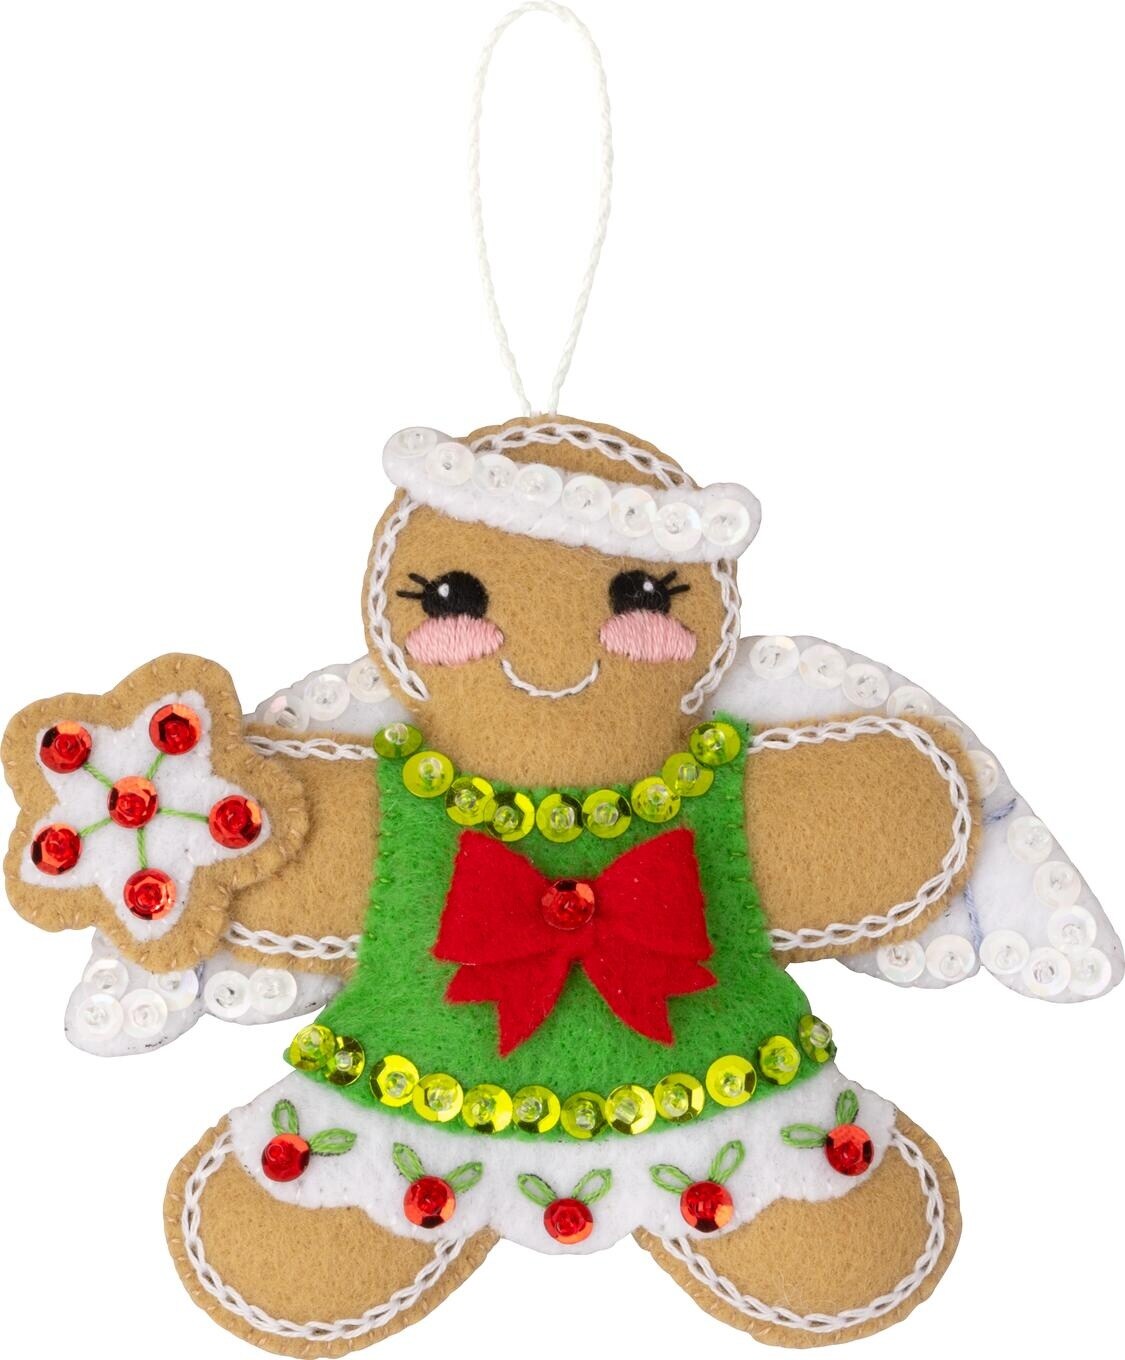 Felt Ornaments Applique Kit - Gingerbread Santa From Bucilla - Bucilla -  Kits - Casa Cenina